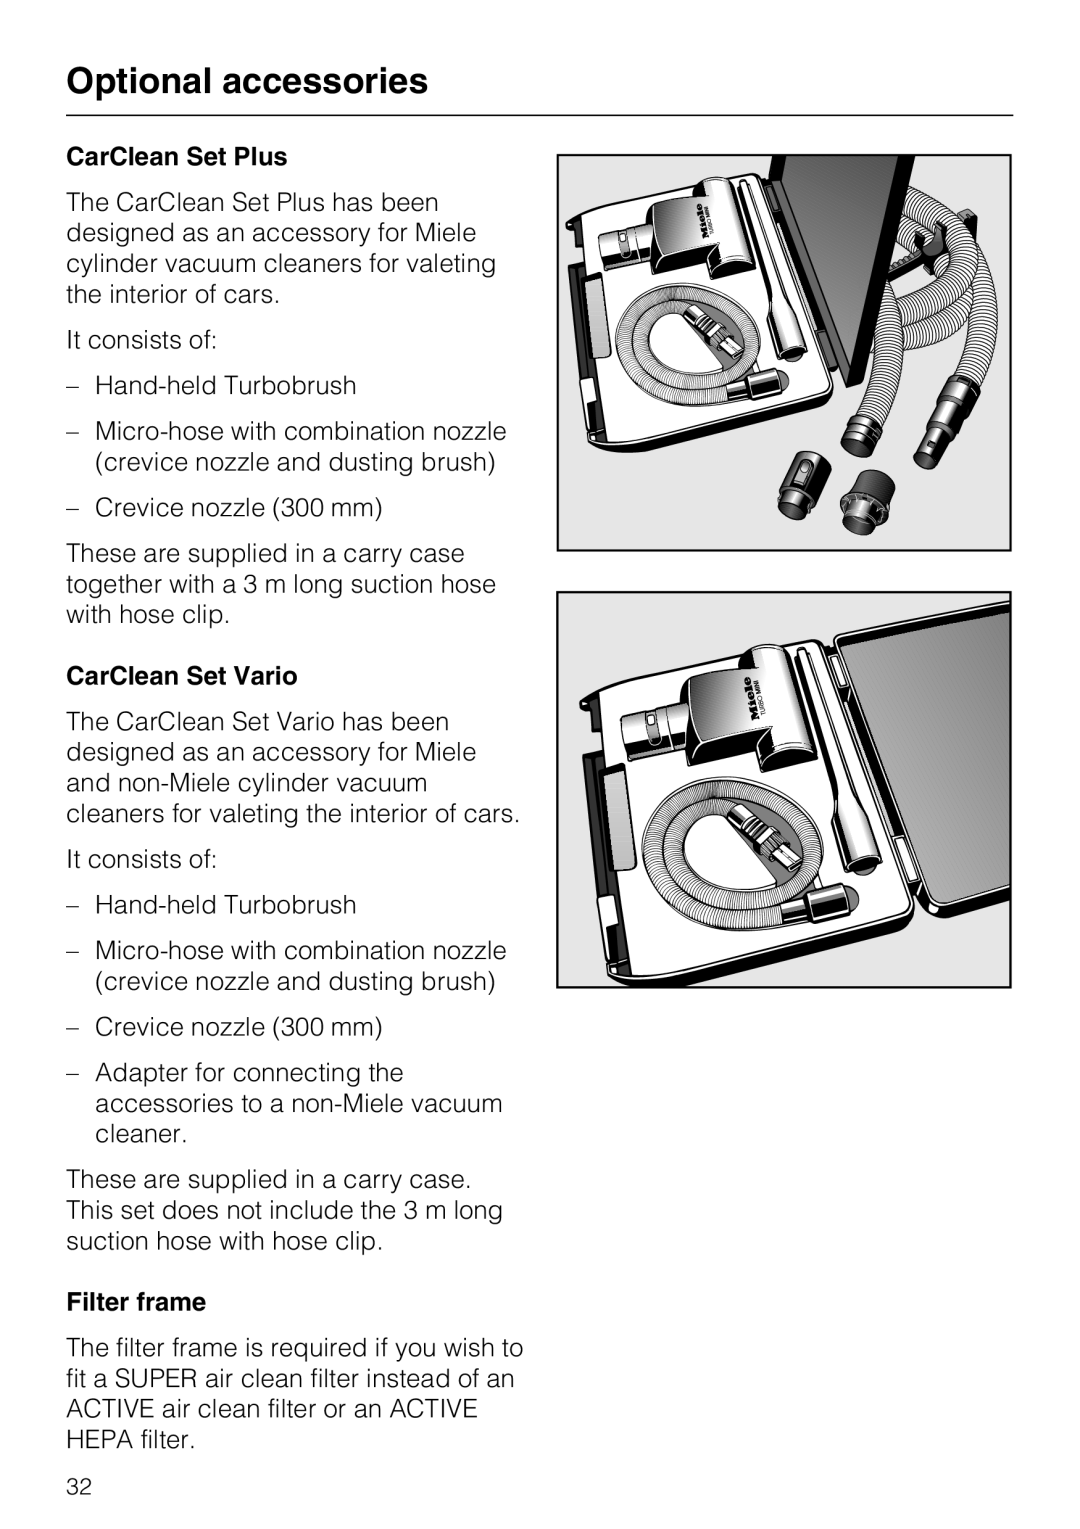 Miele S 360, S 388 manual CarClean Set Plus, CarClean Set Vario, Filter frame, Optional accessories 